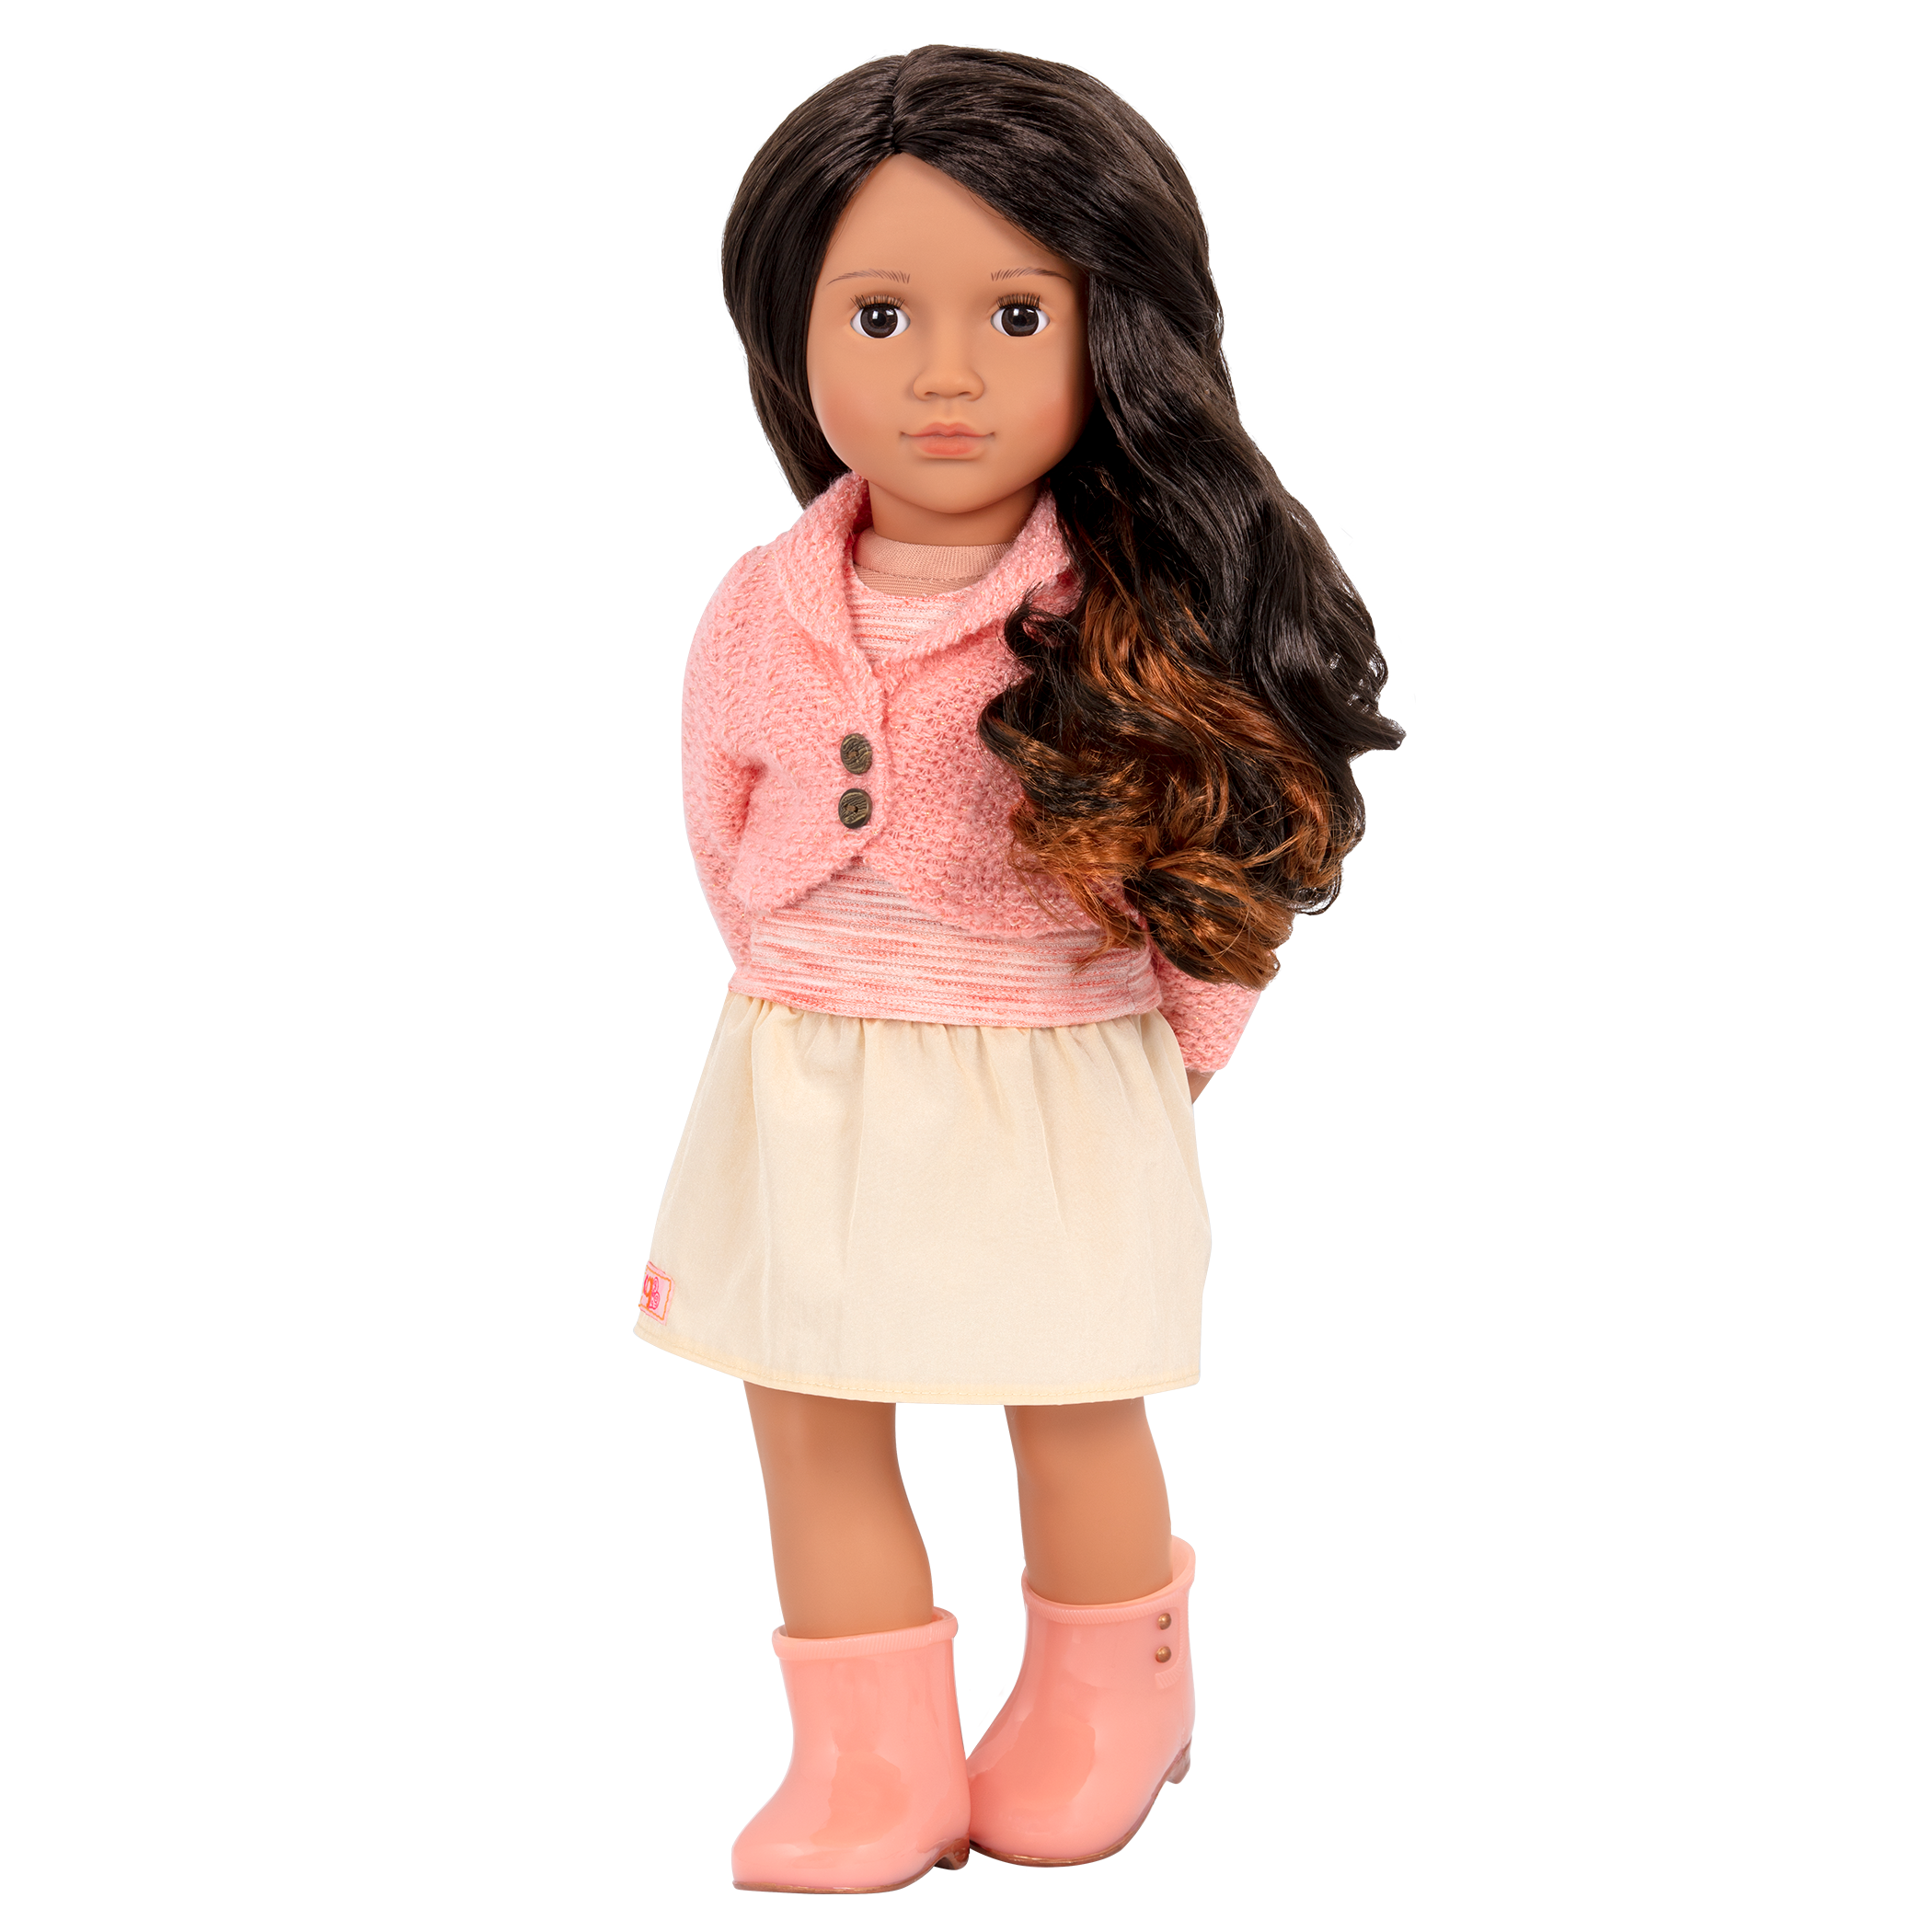  Our Generation Doll By Battat- April 18 inch Regular